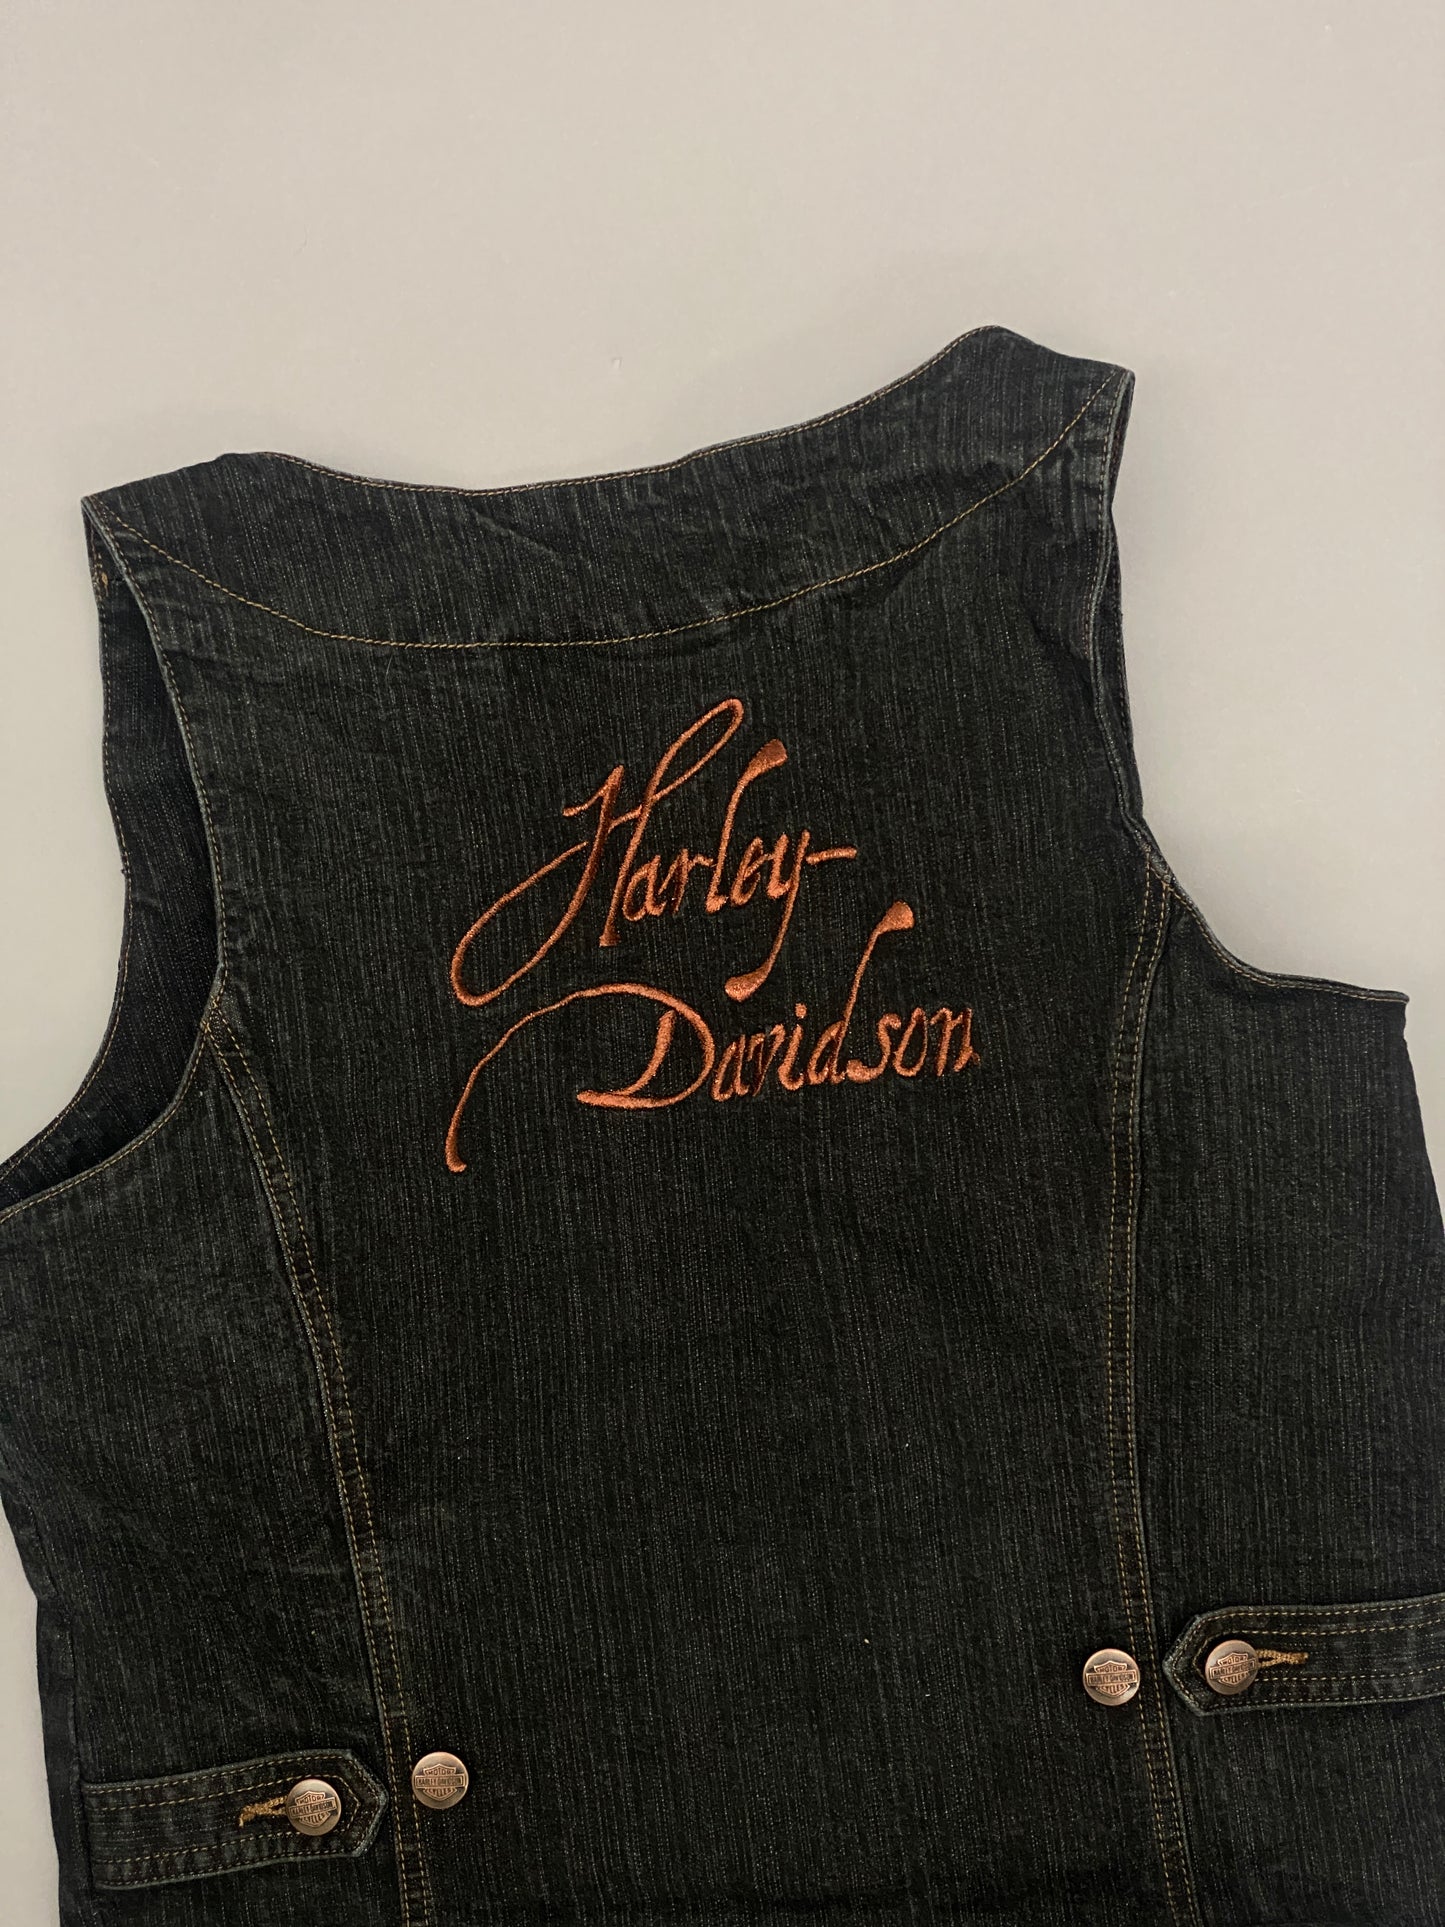 Chaleco Harley Davidson